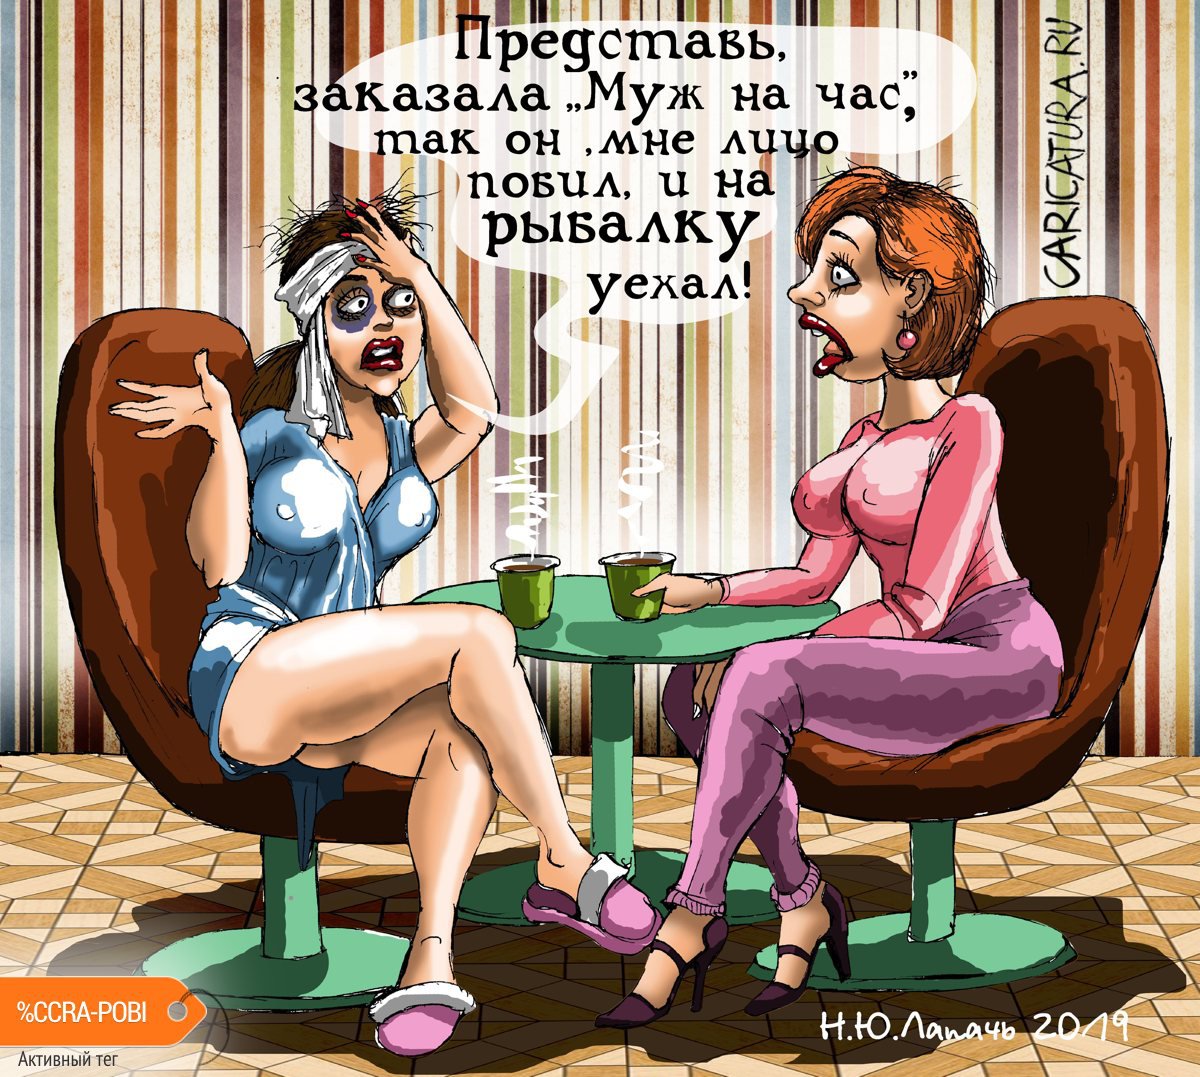 Карикатура "Жесткий реализм", Теплый Телогрей